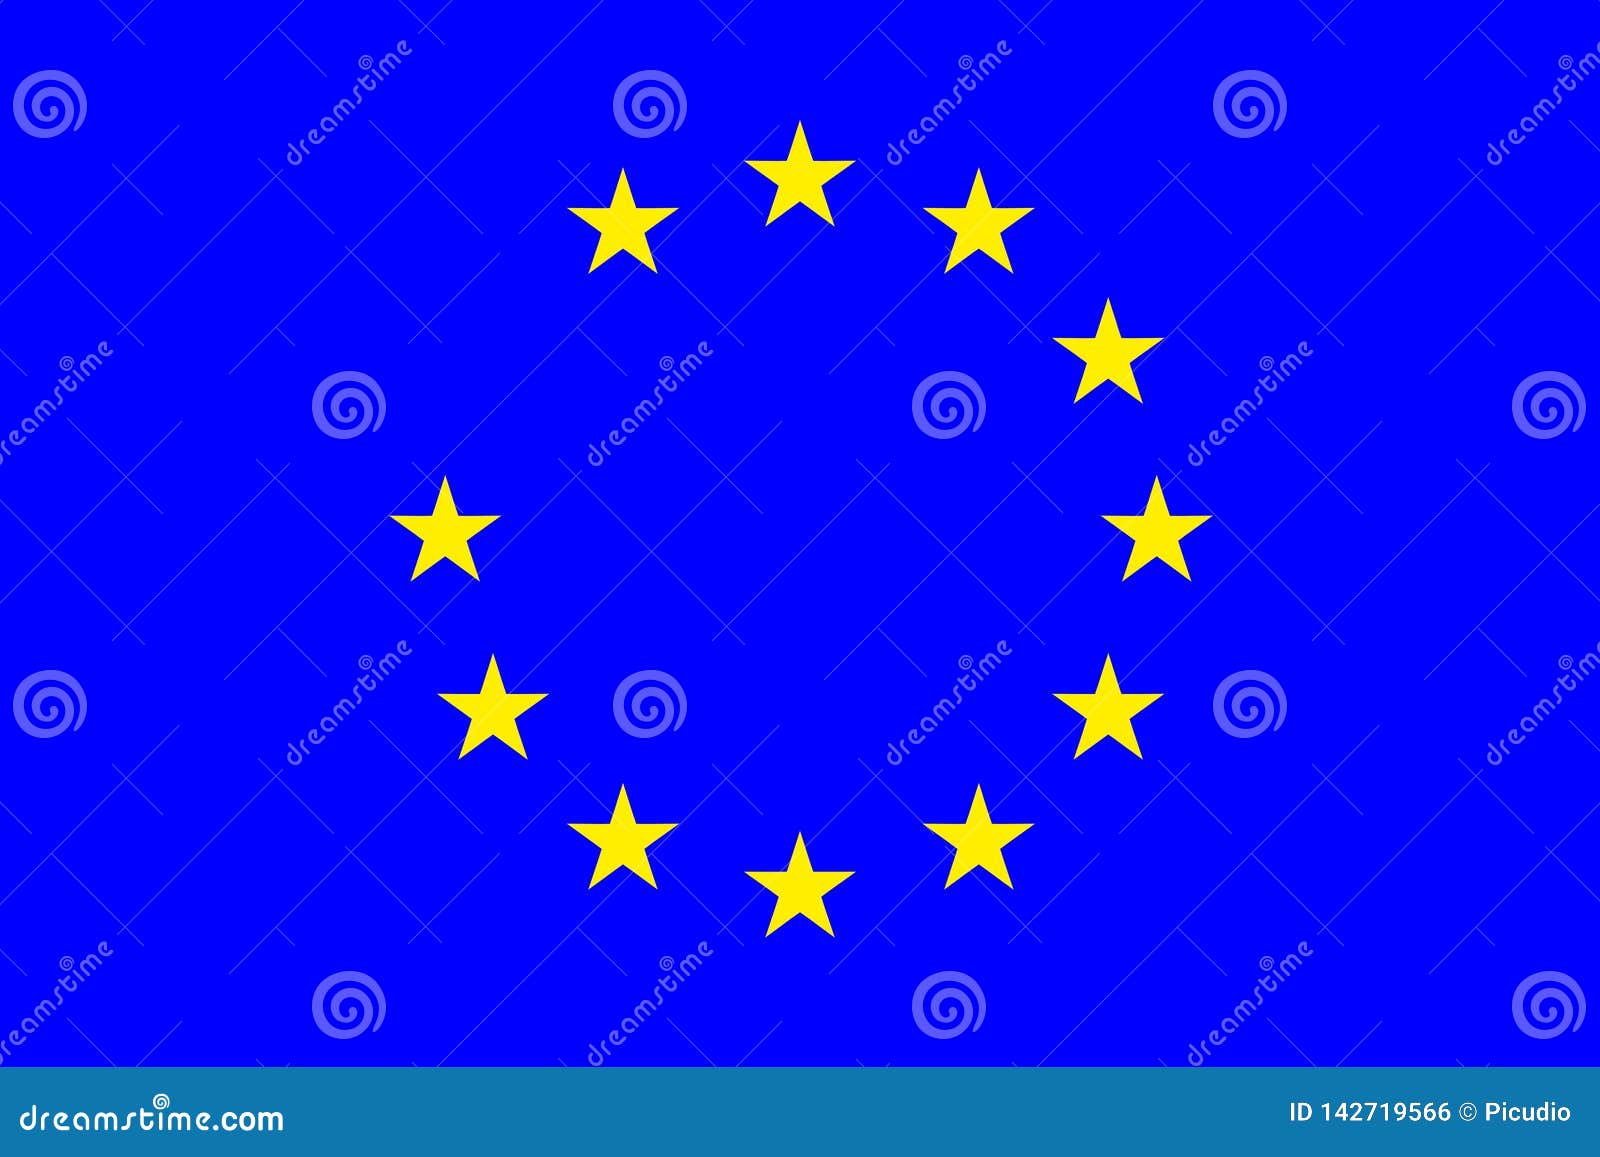 eu-european-flag-missing-star-representing-brexit-eu-euopean-flag-missing-star-142719566.jpg